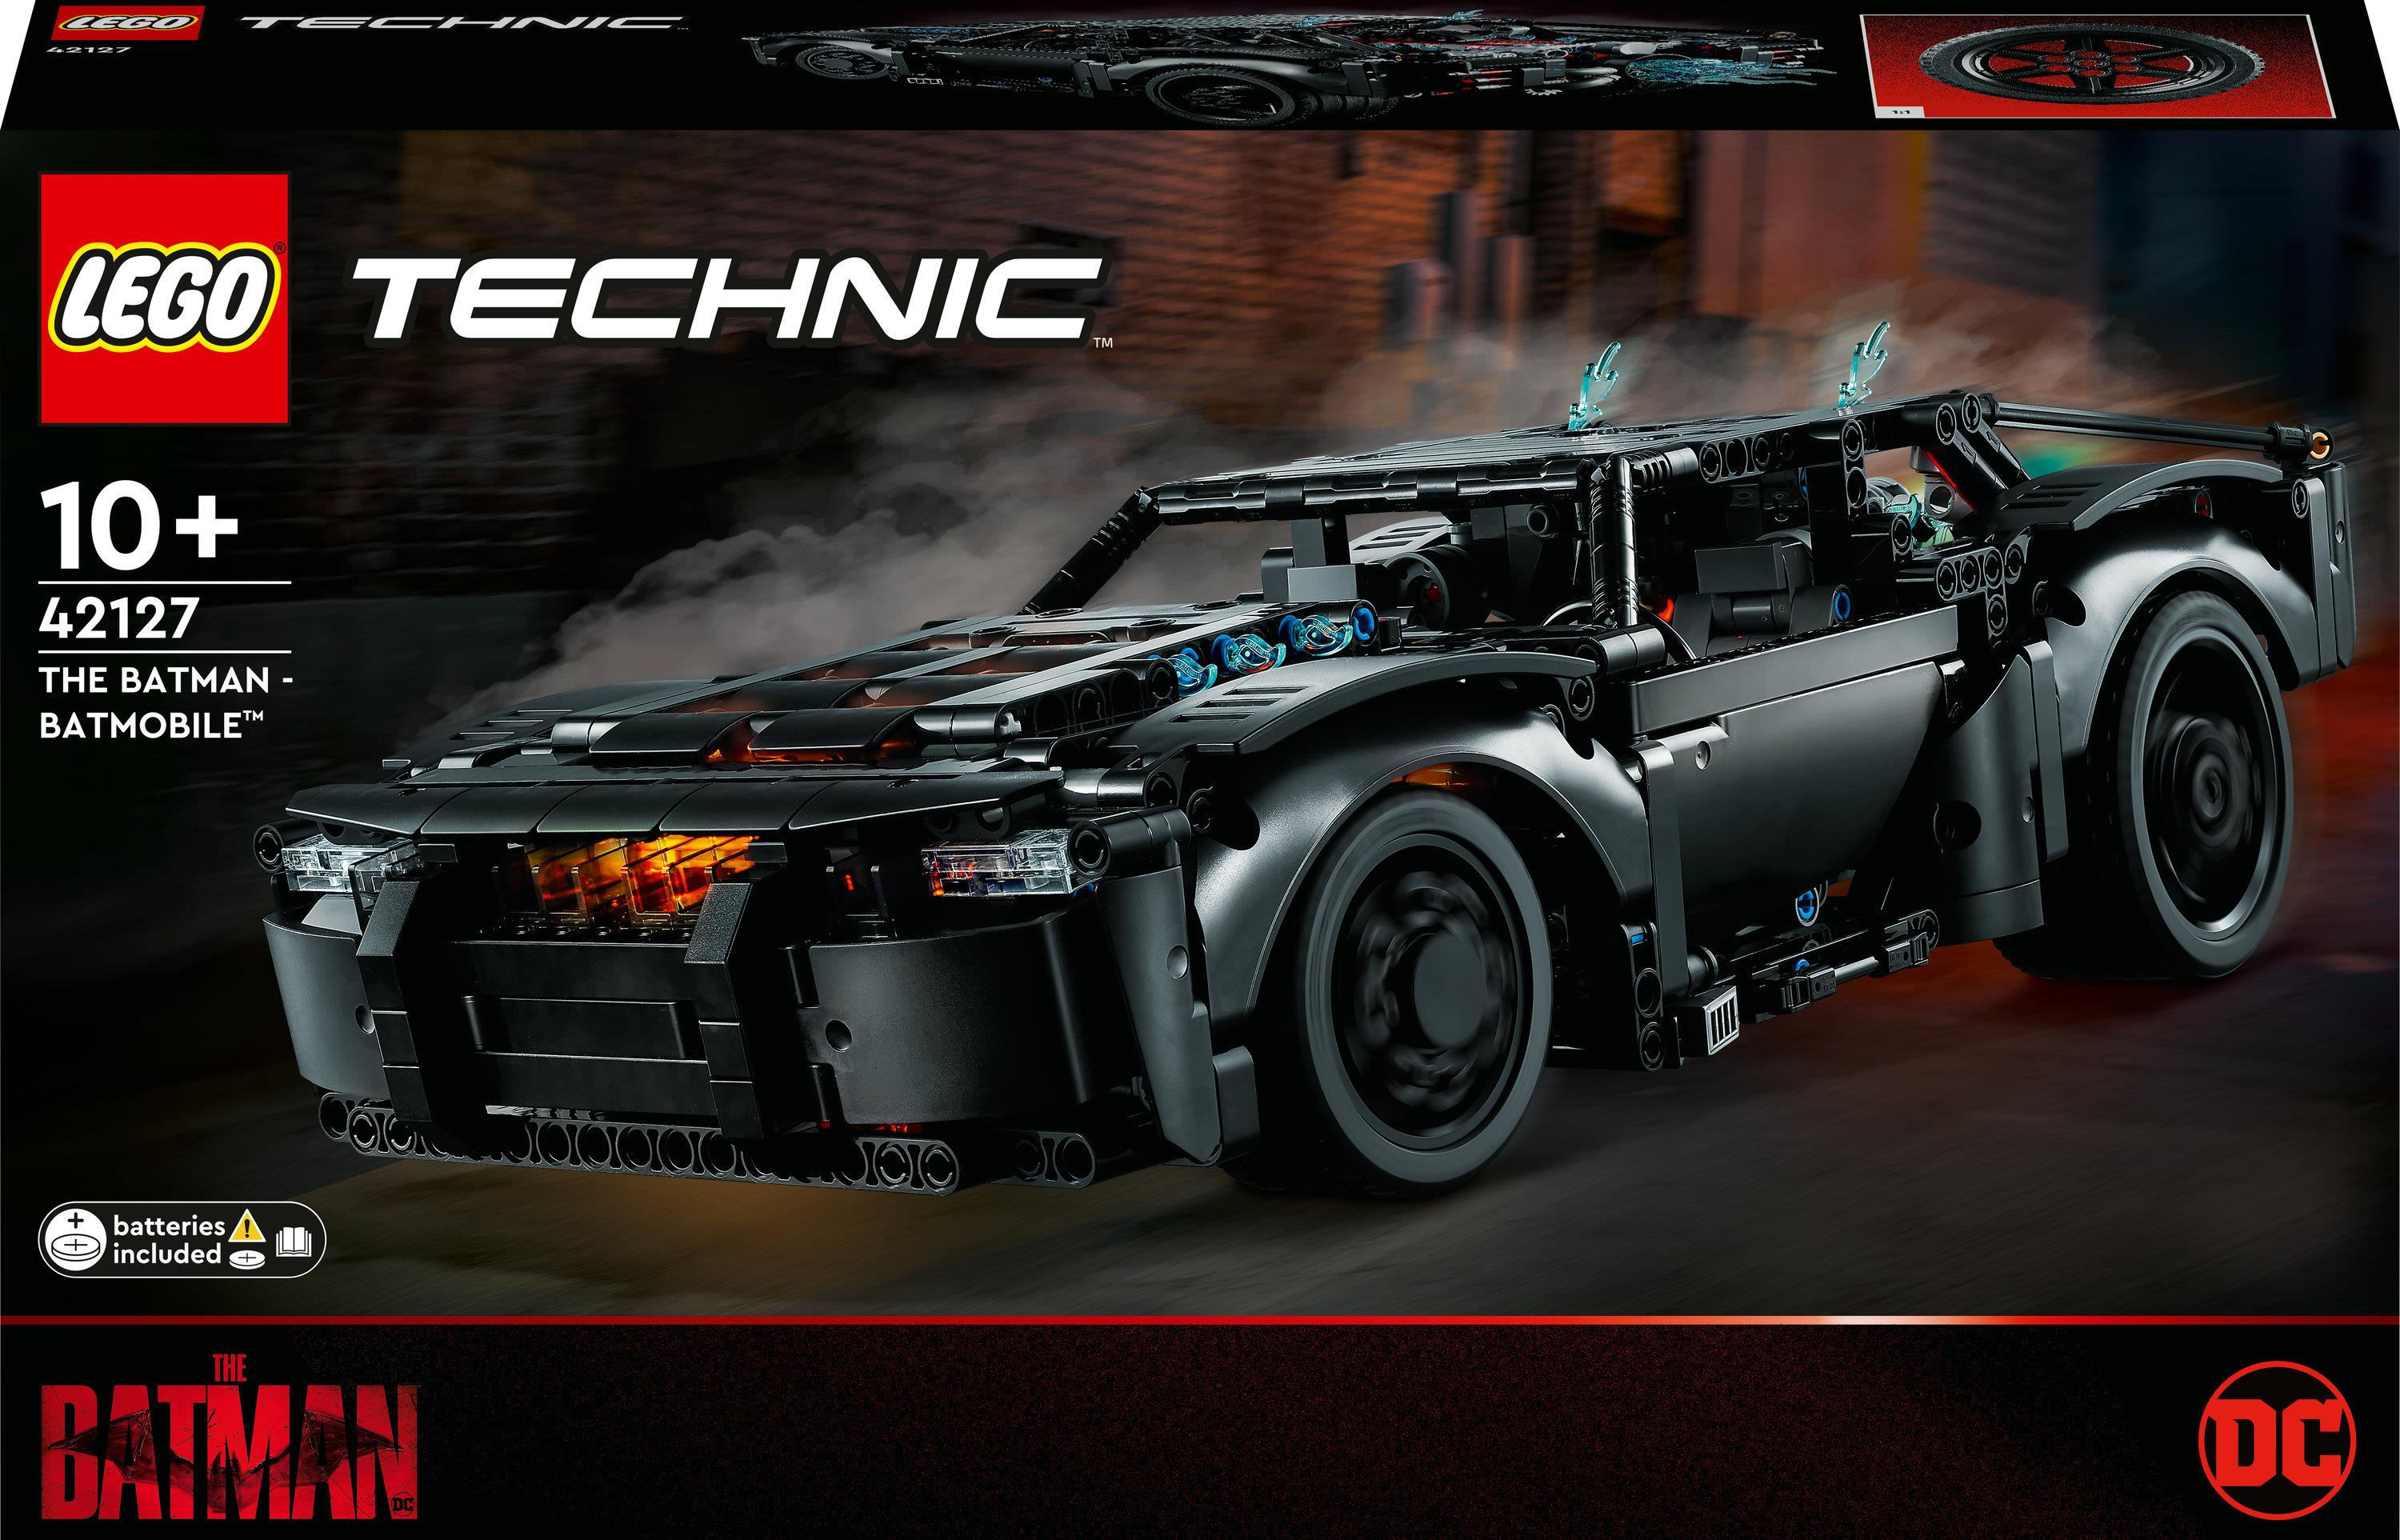 LEGO Technic Batmobile Di